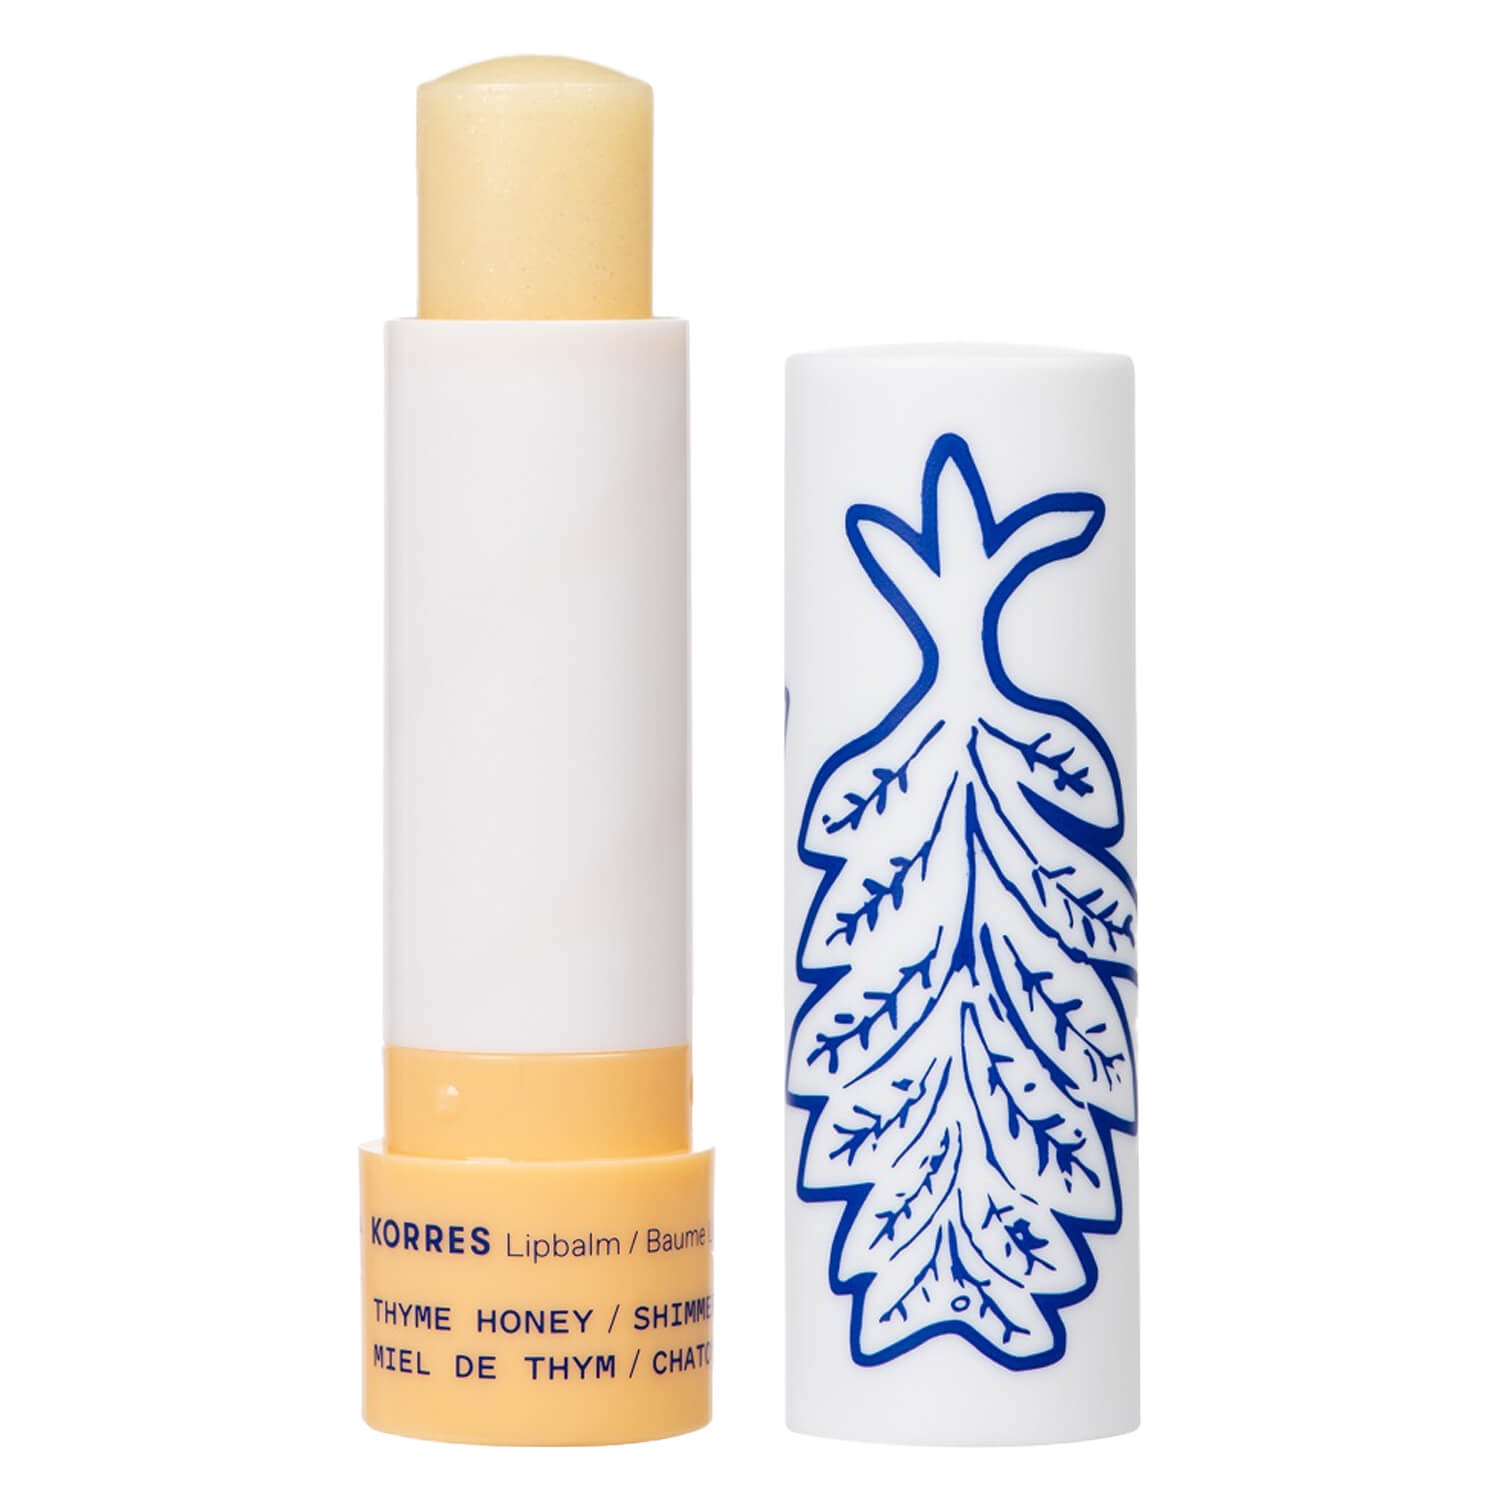 Produktbild von Korres Care - Thyme Honey Lip Balm Shimmery